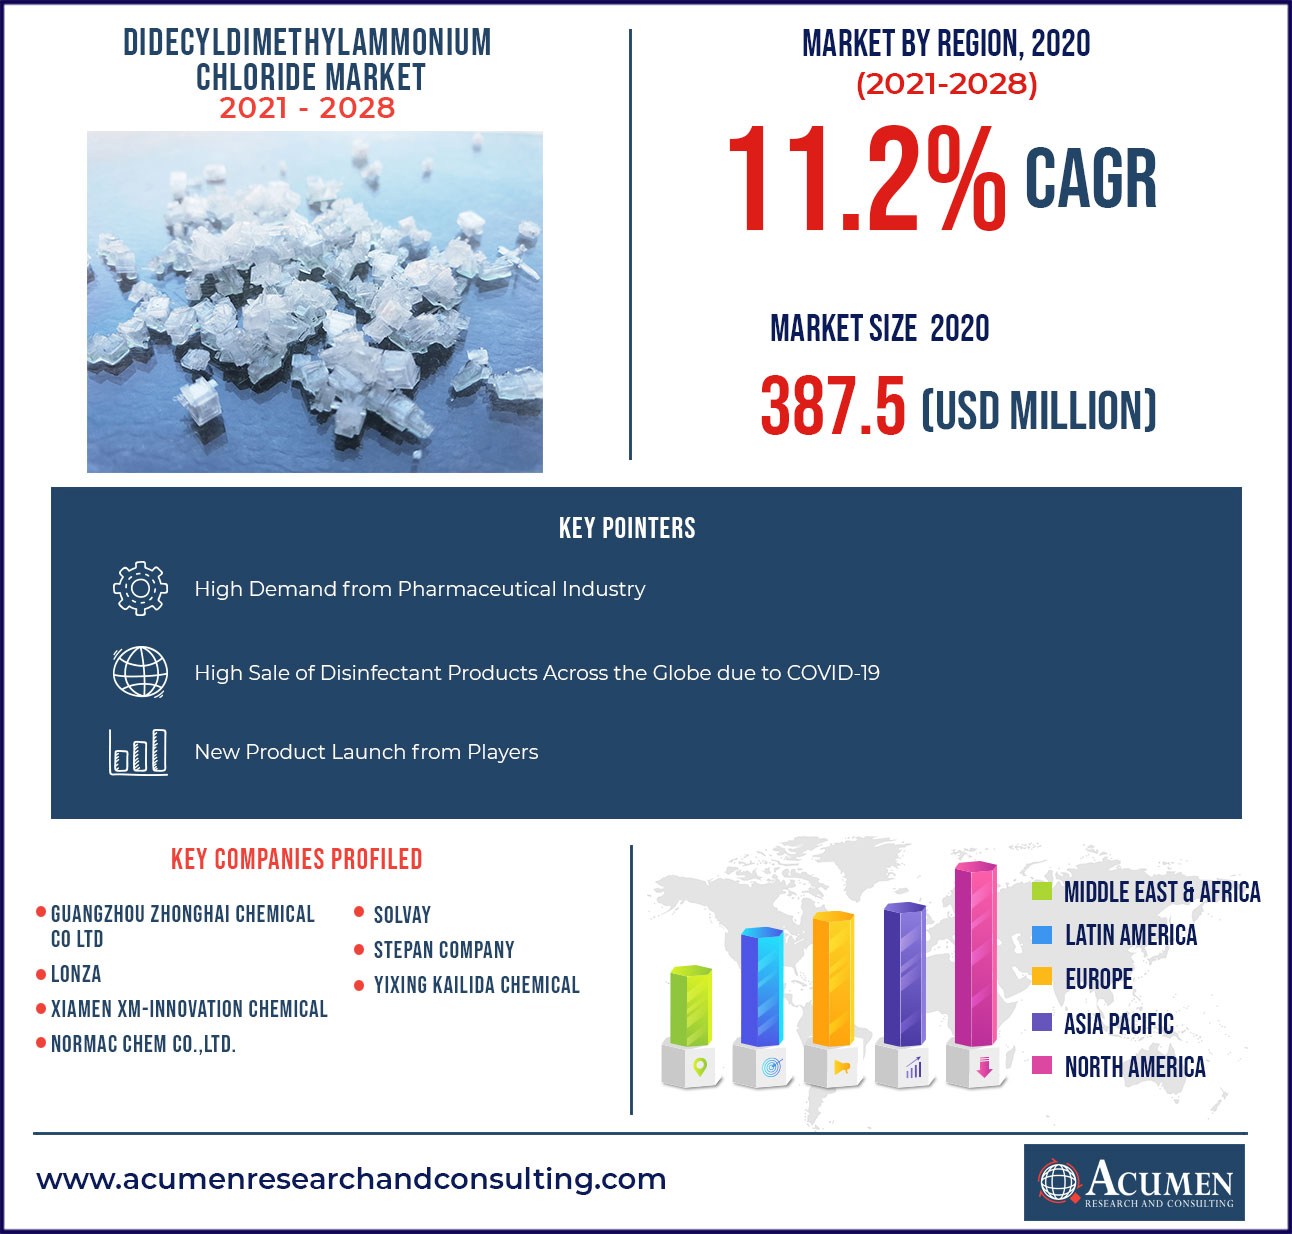 Didecyldimethylammonium Chloride Market - CAGR of 11.2% from 2021-2028